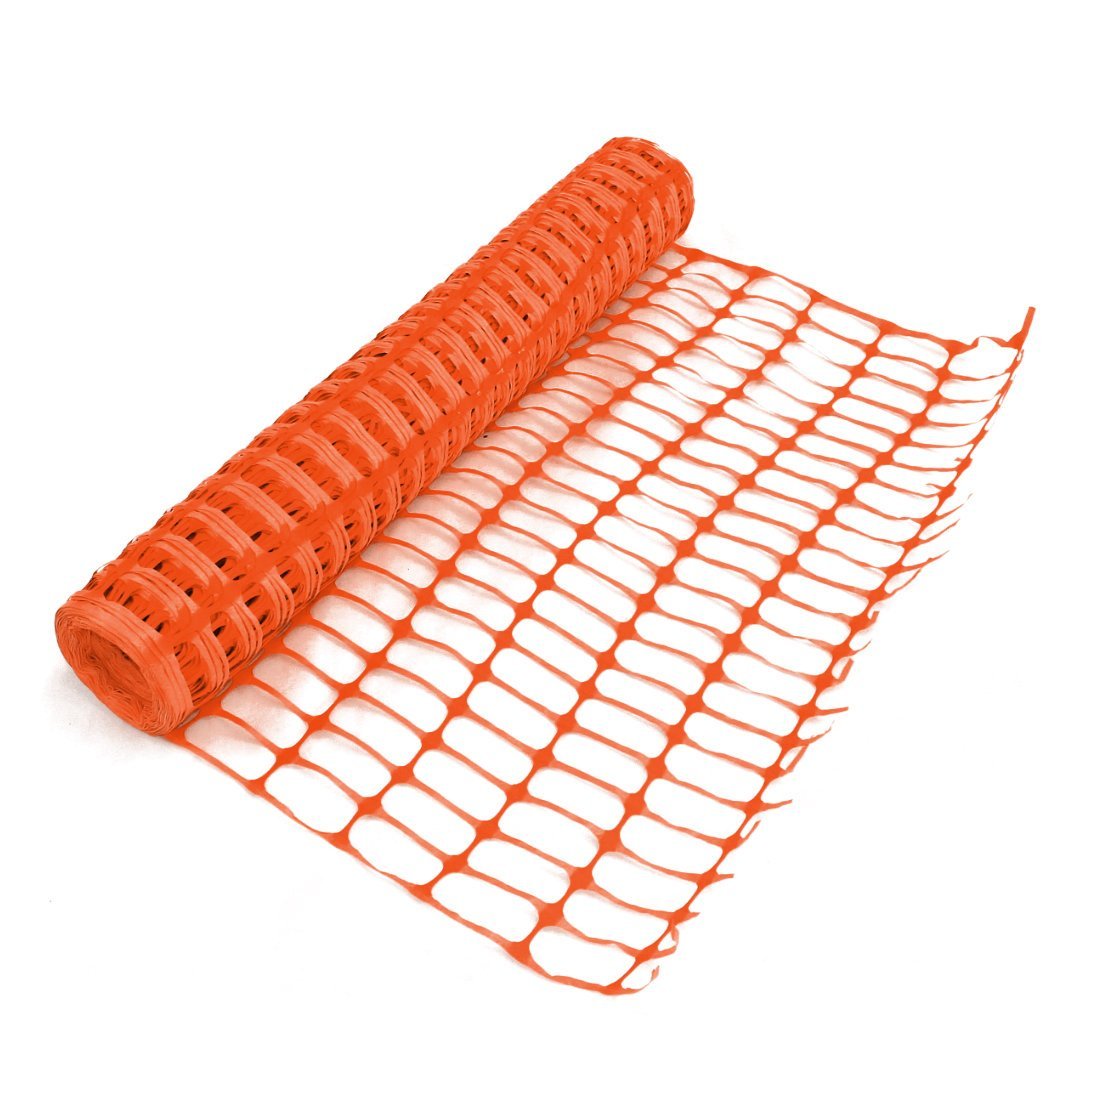 Orange Safety Barrier Mesh Fence Netting 1M * 15M